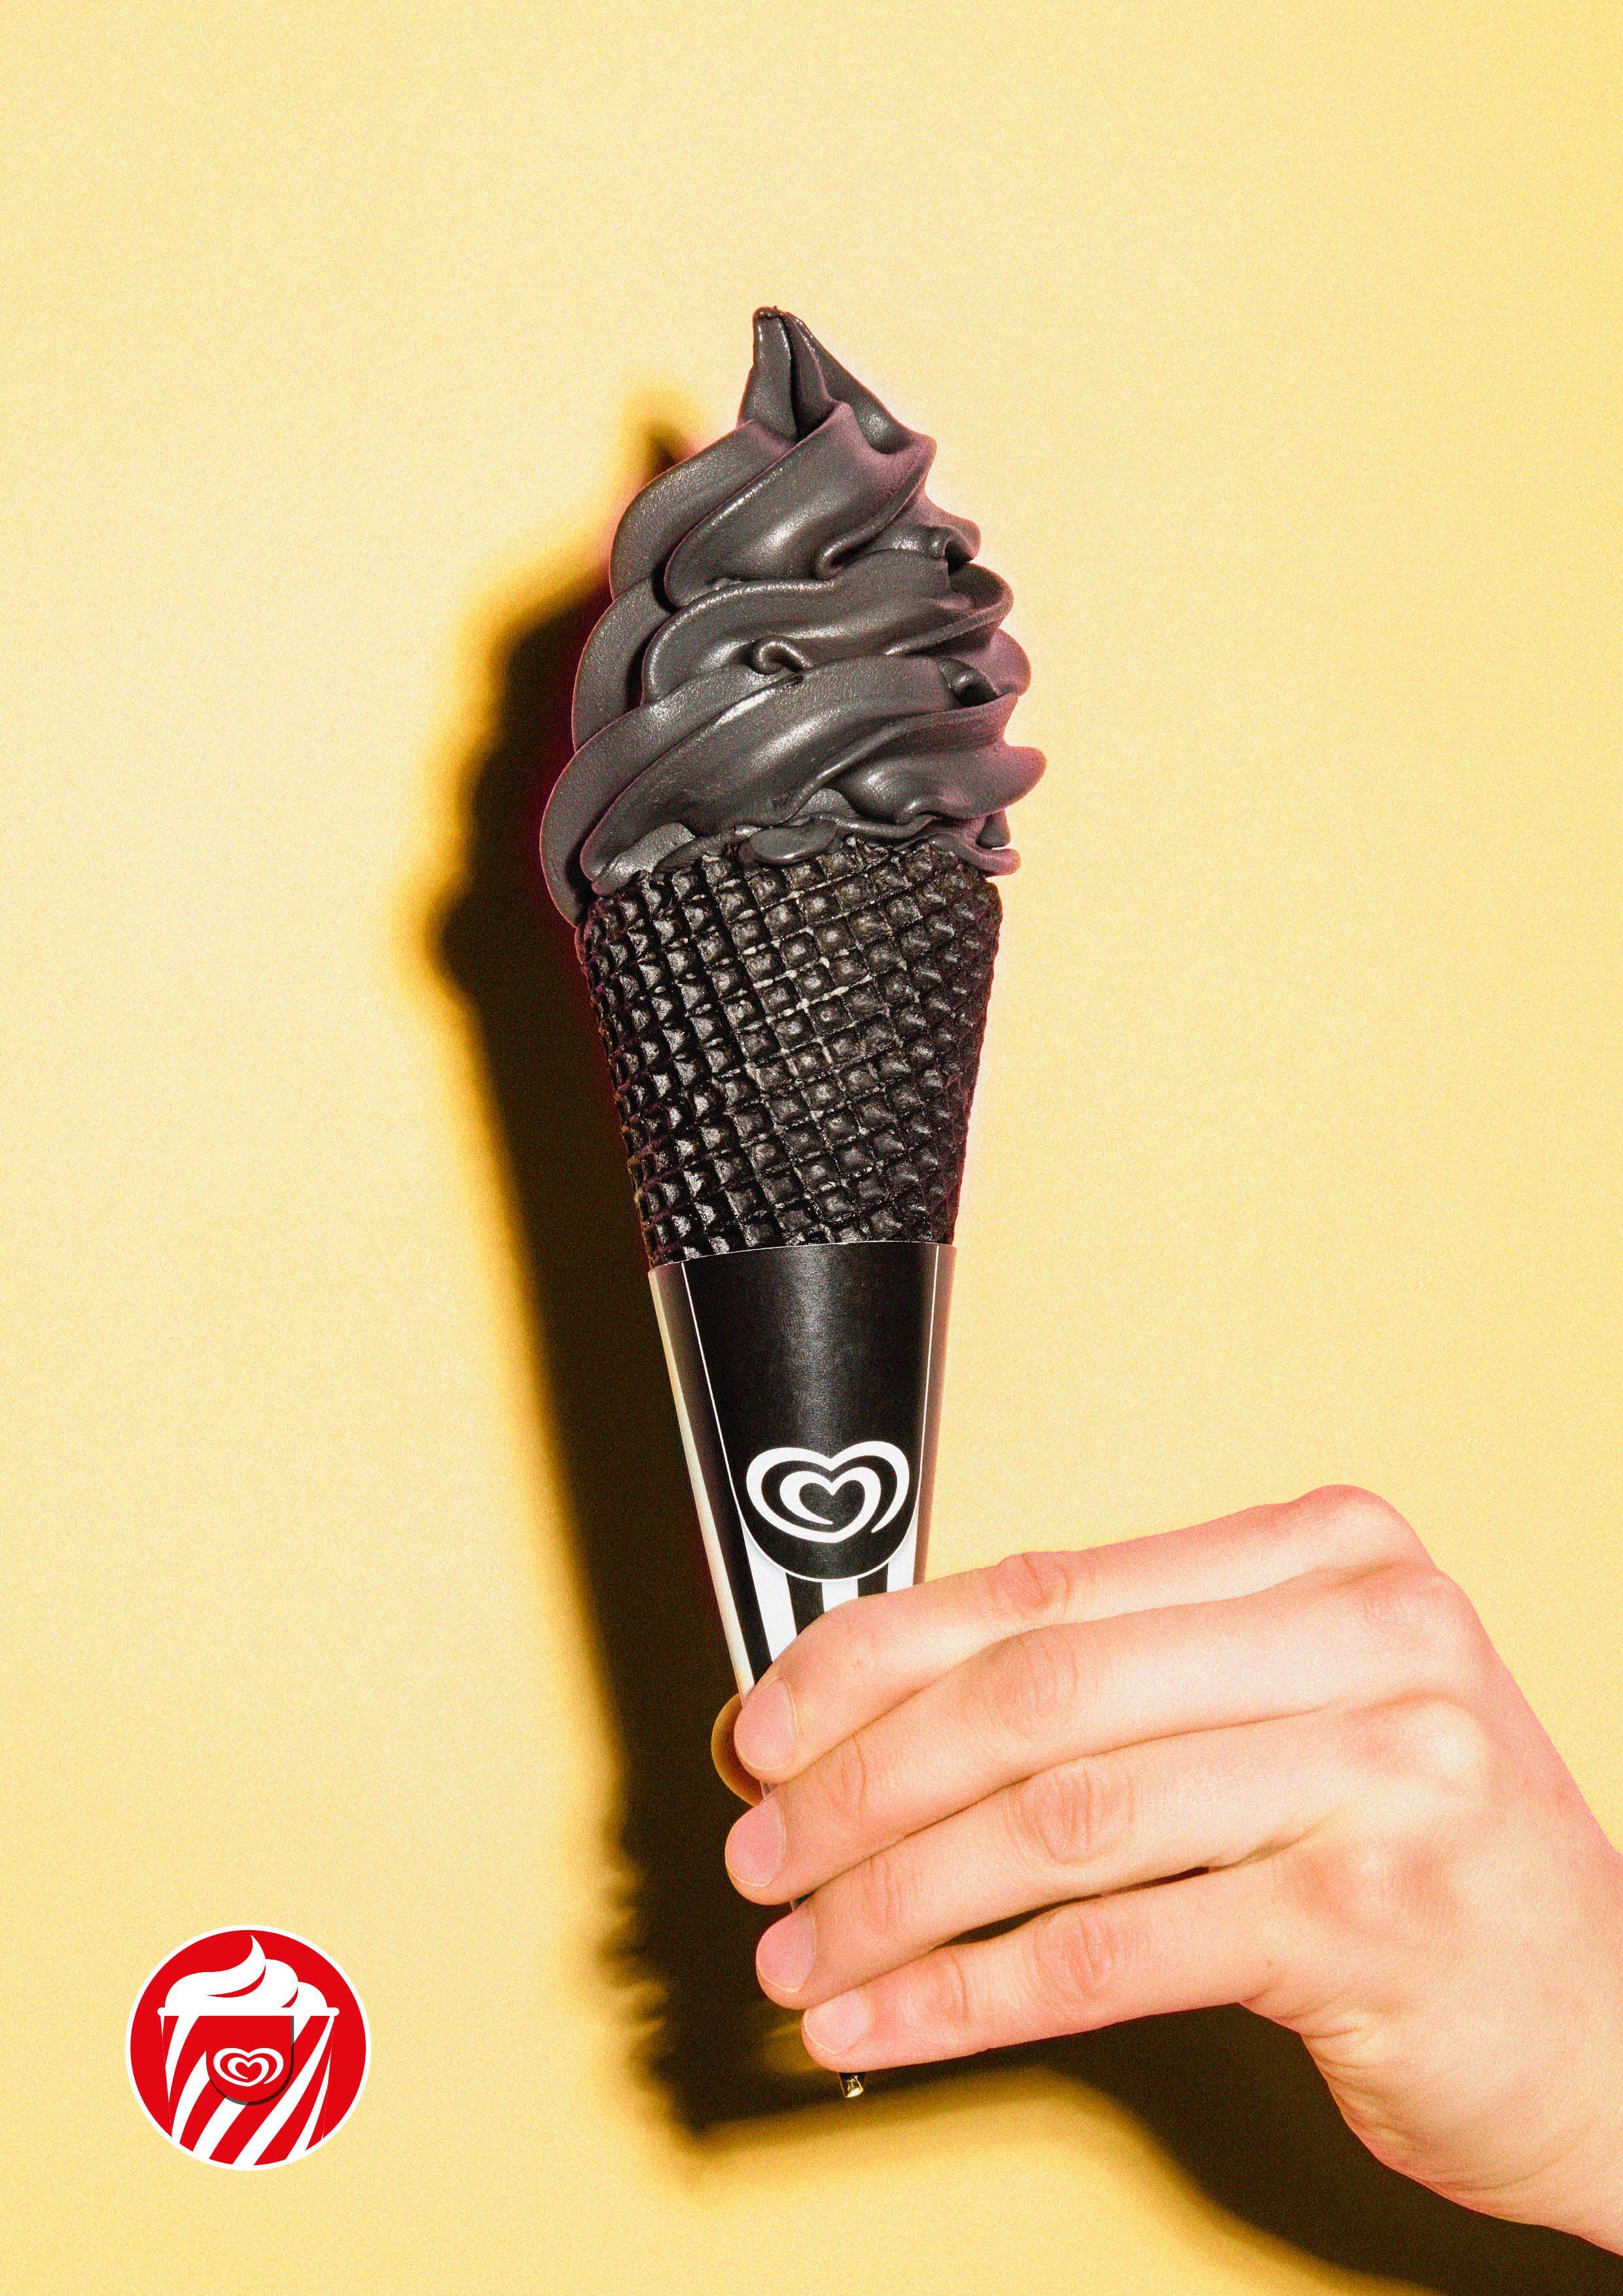 Black Ice Cream Logo - Frozen blackout: Swirl's brings black ice cream to the Netherlands